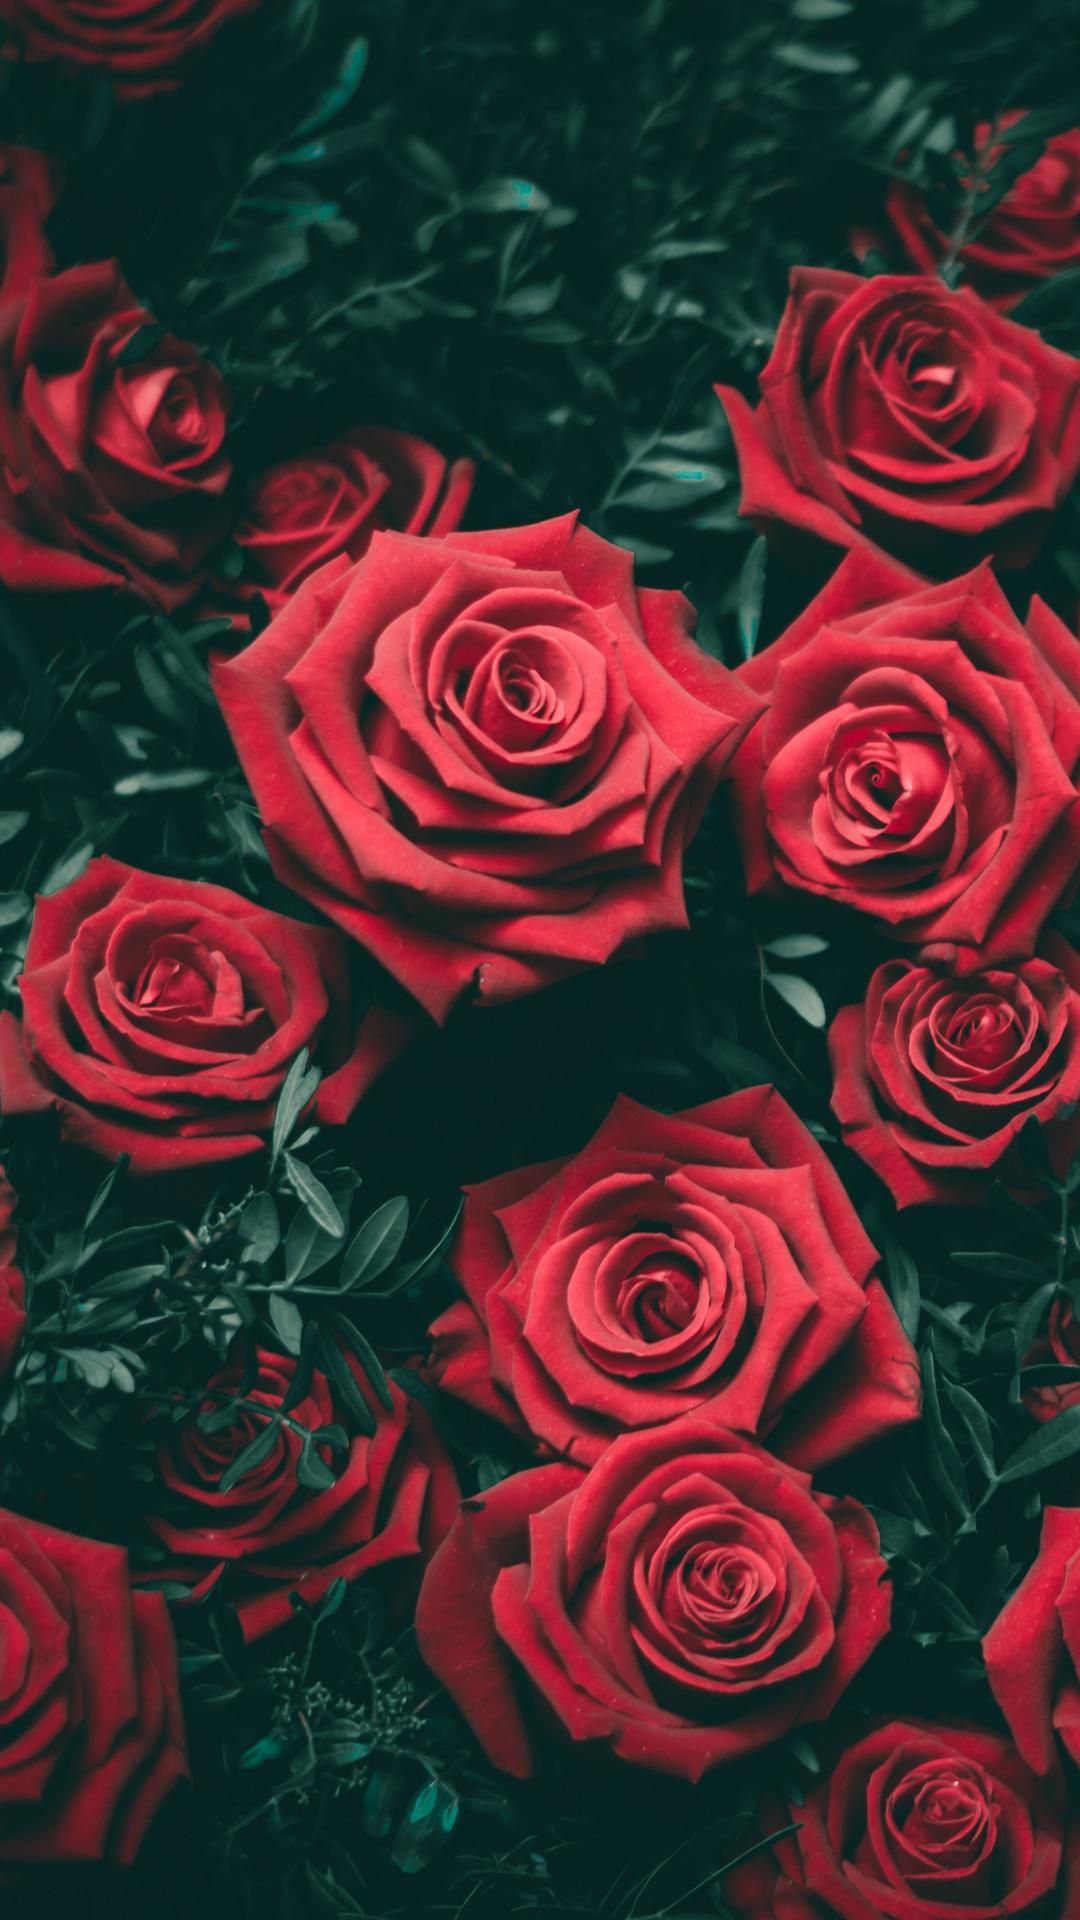 Red aesthetic dark rose 